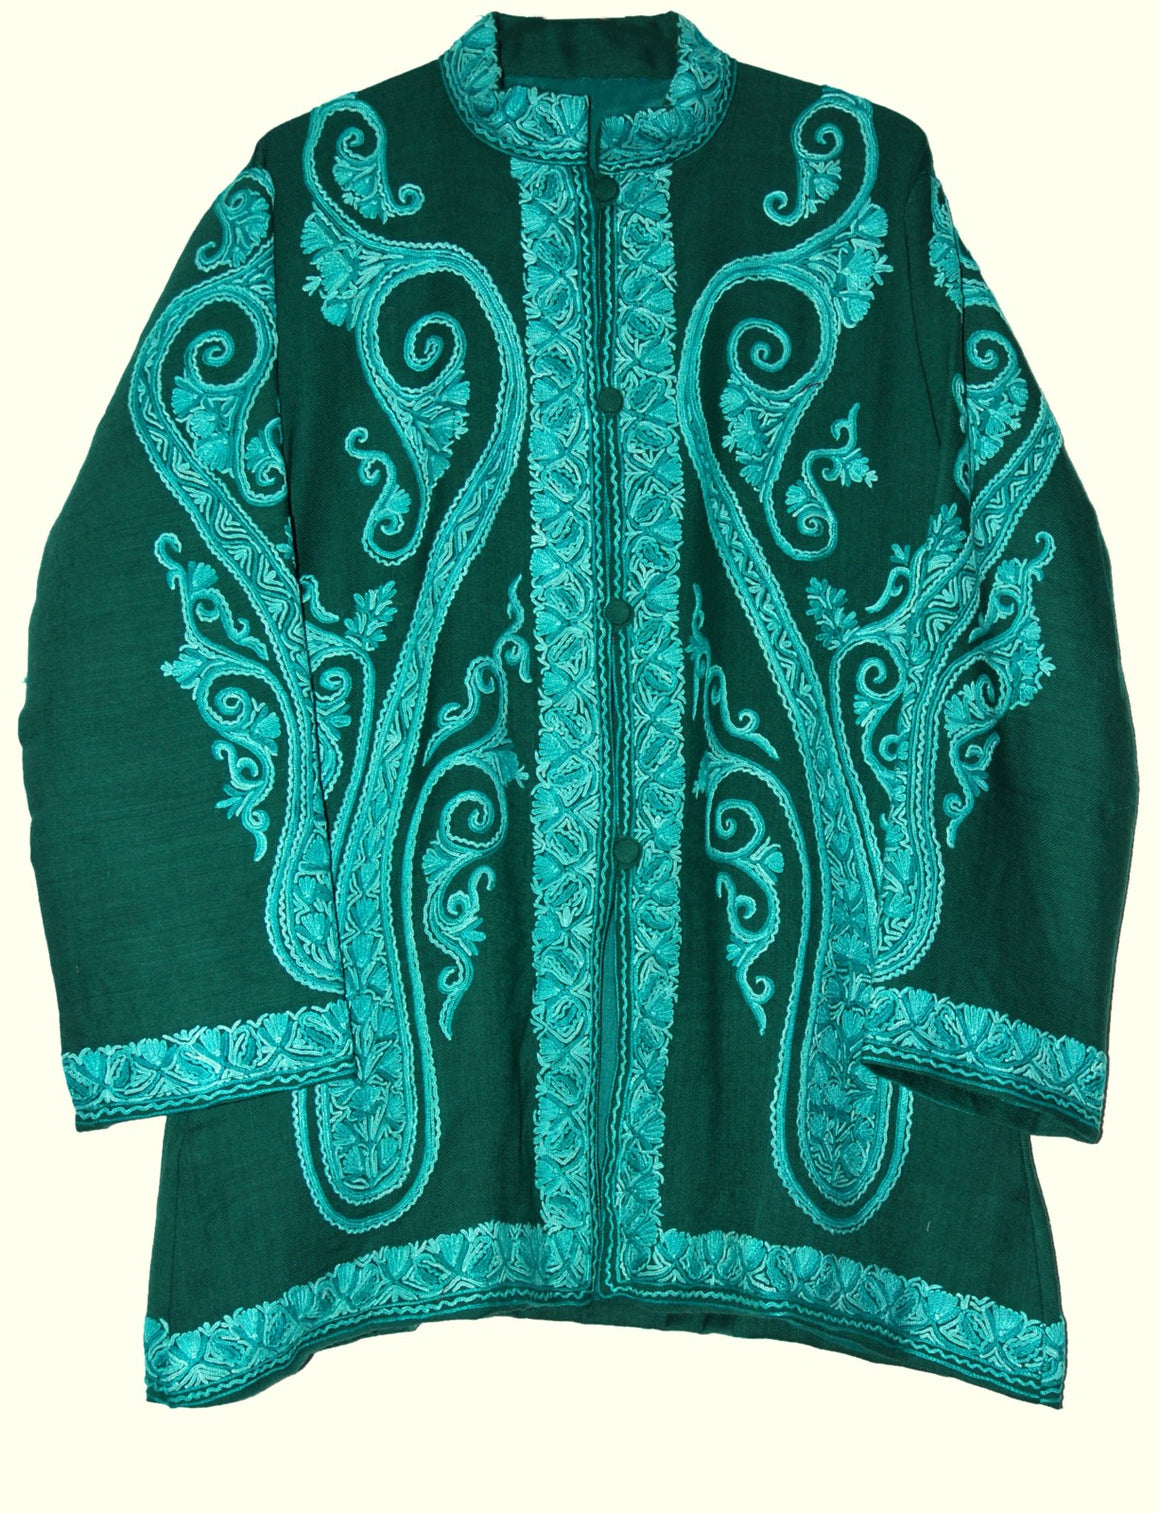 Embroidered Jackets, Kashmir Jackets 